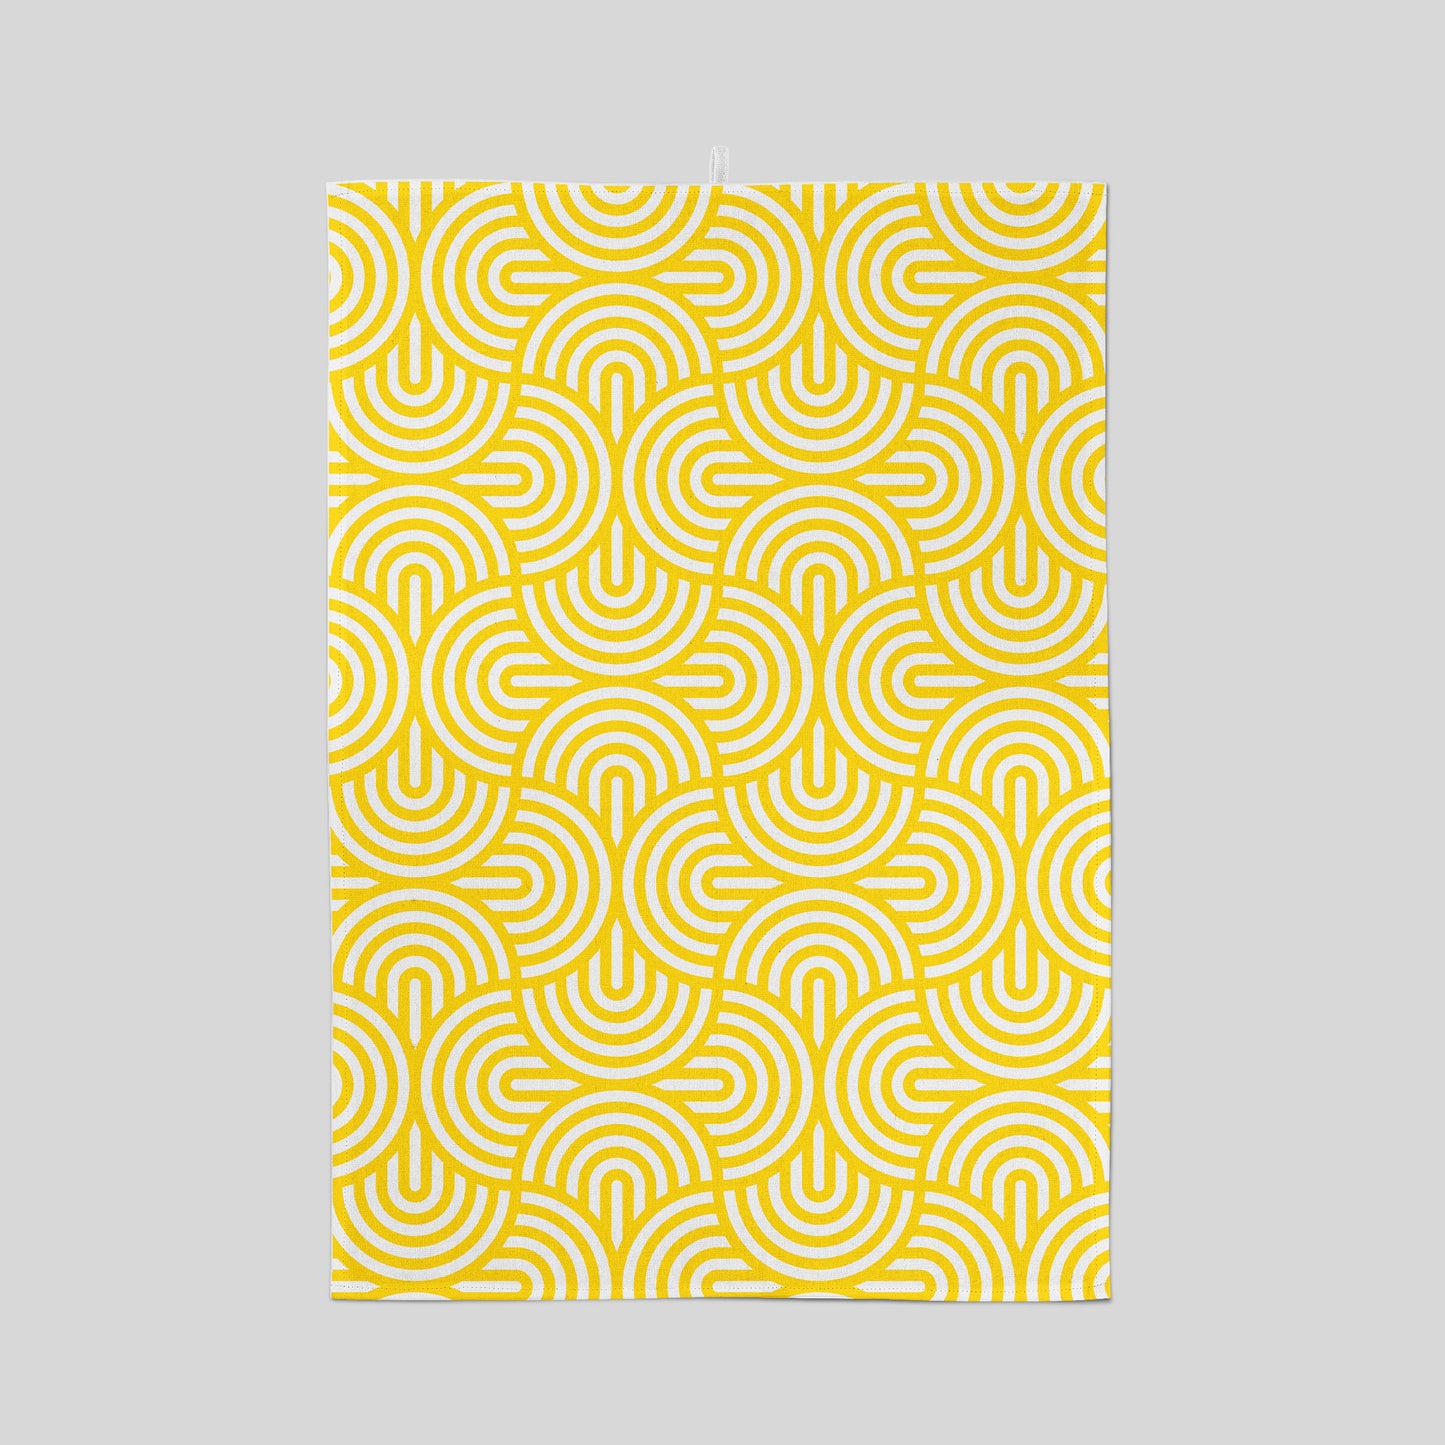 Screen printed tea towel with bright yellow geometric pattern